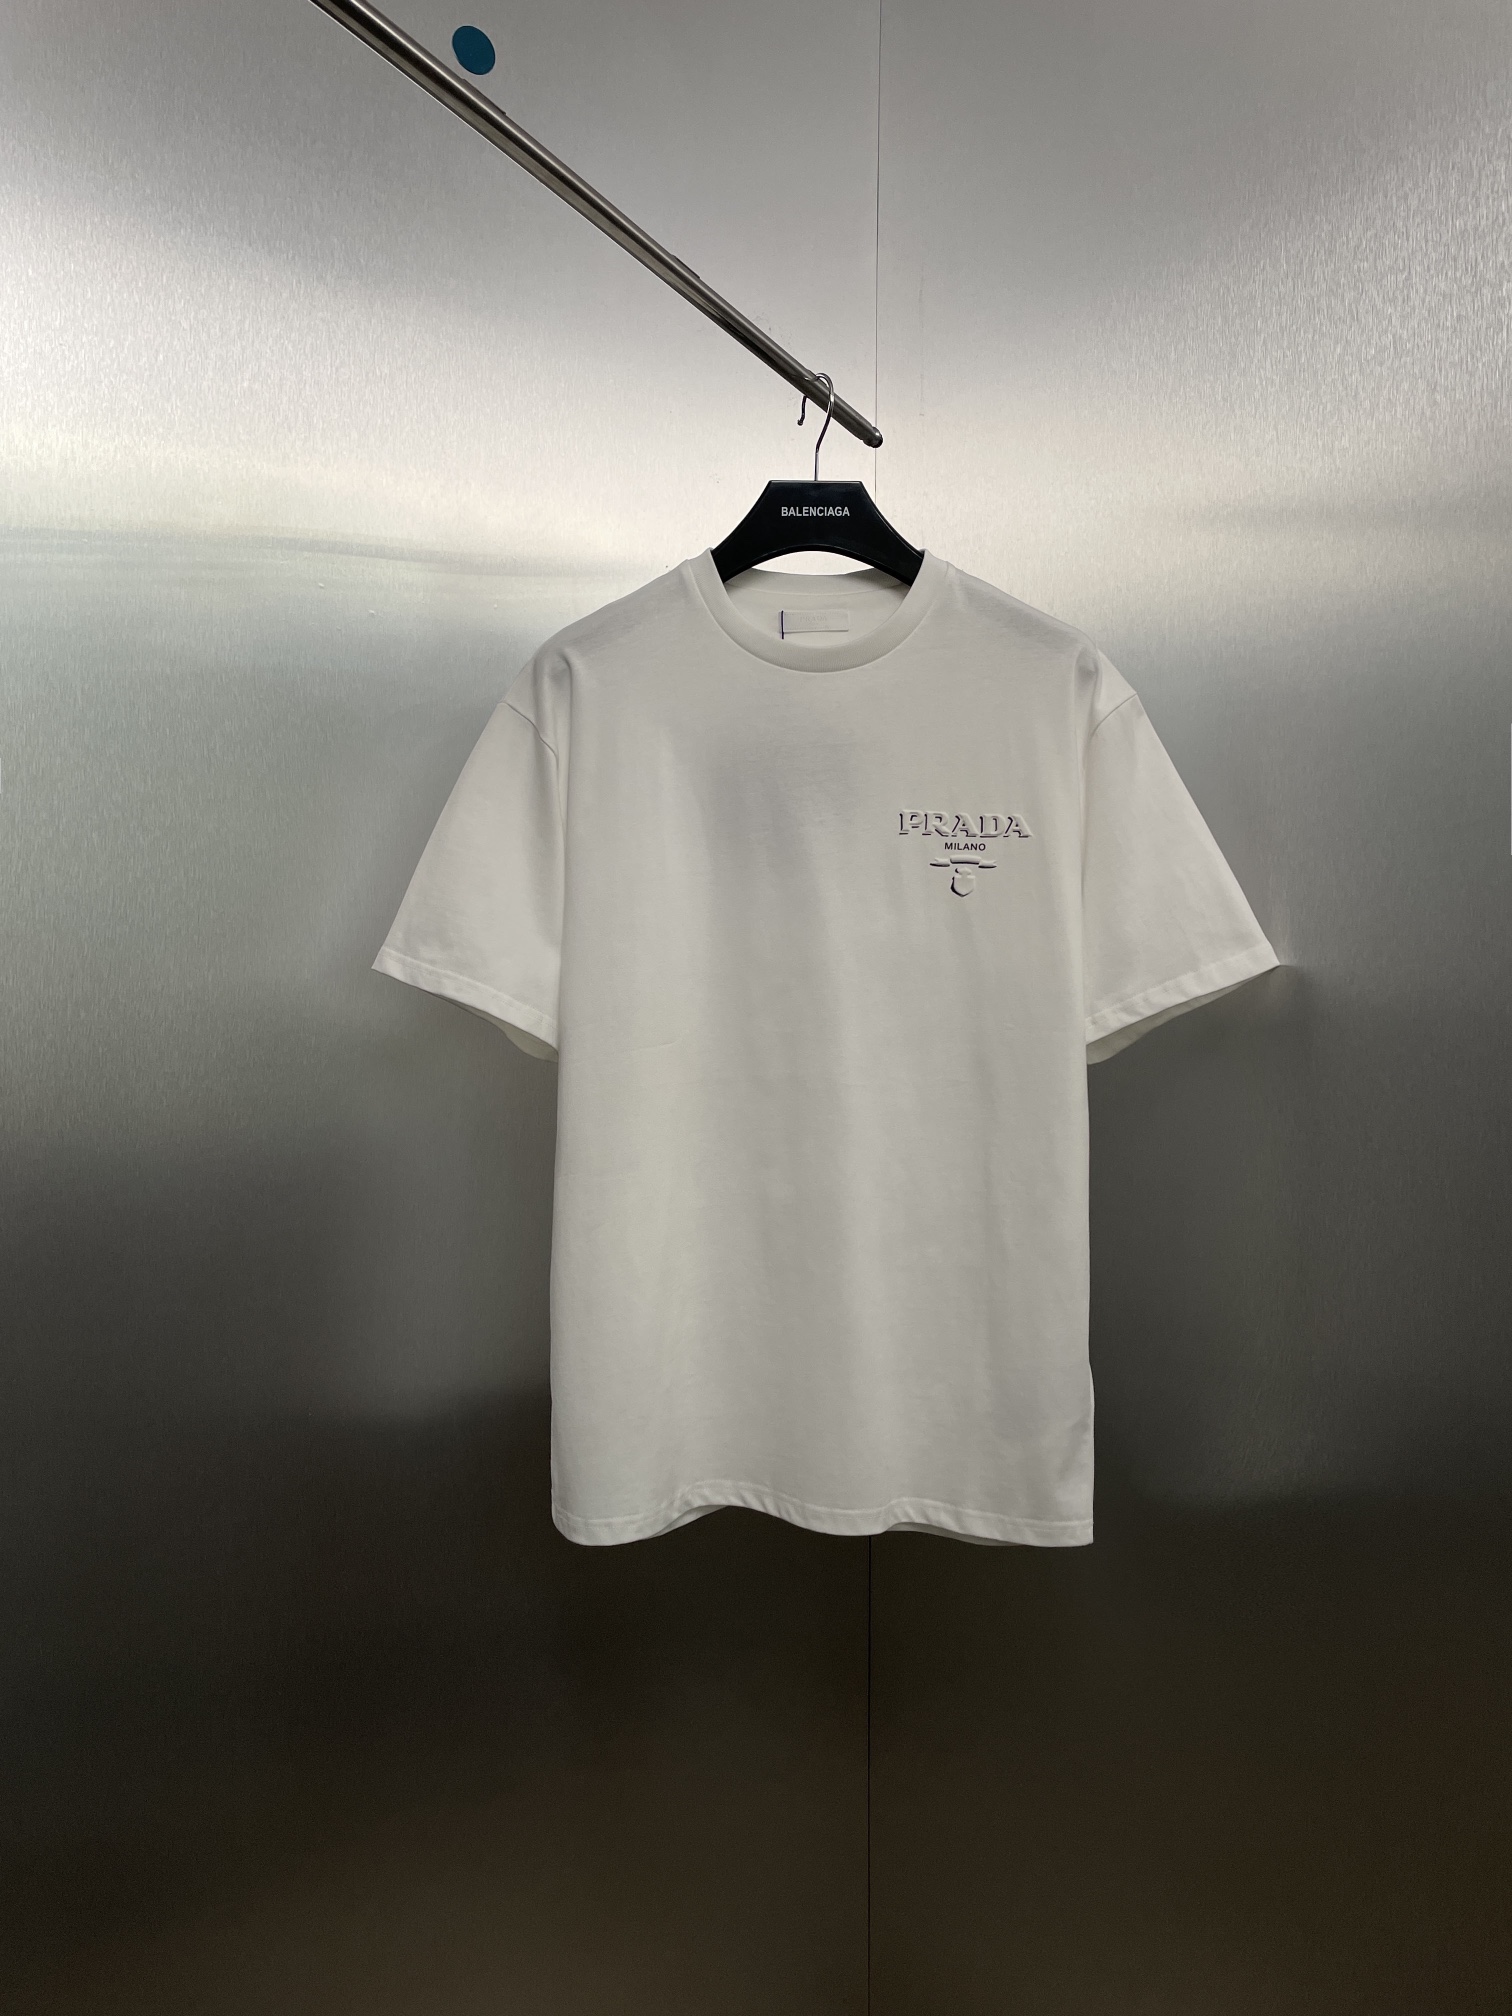 Prada Clothing T-Shirt Cotton Short Sleeve